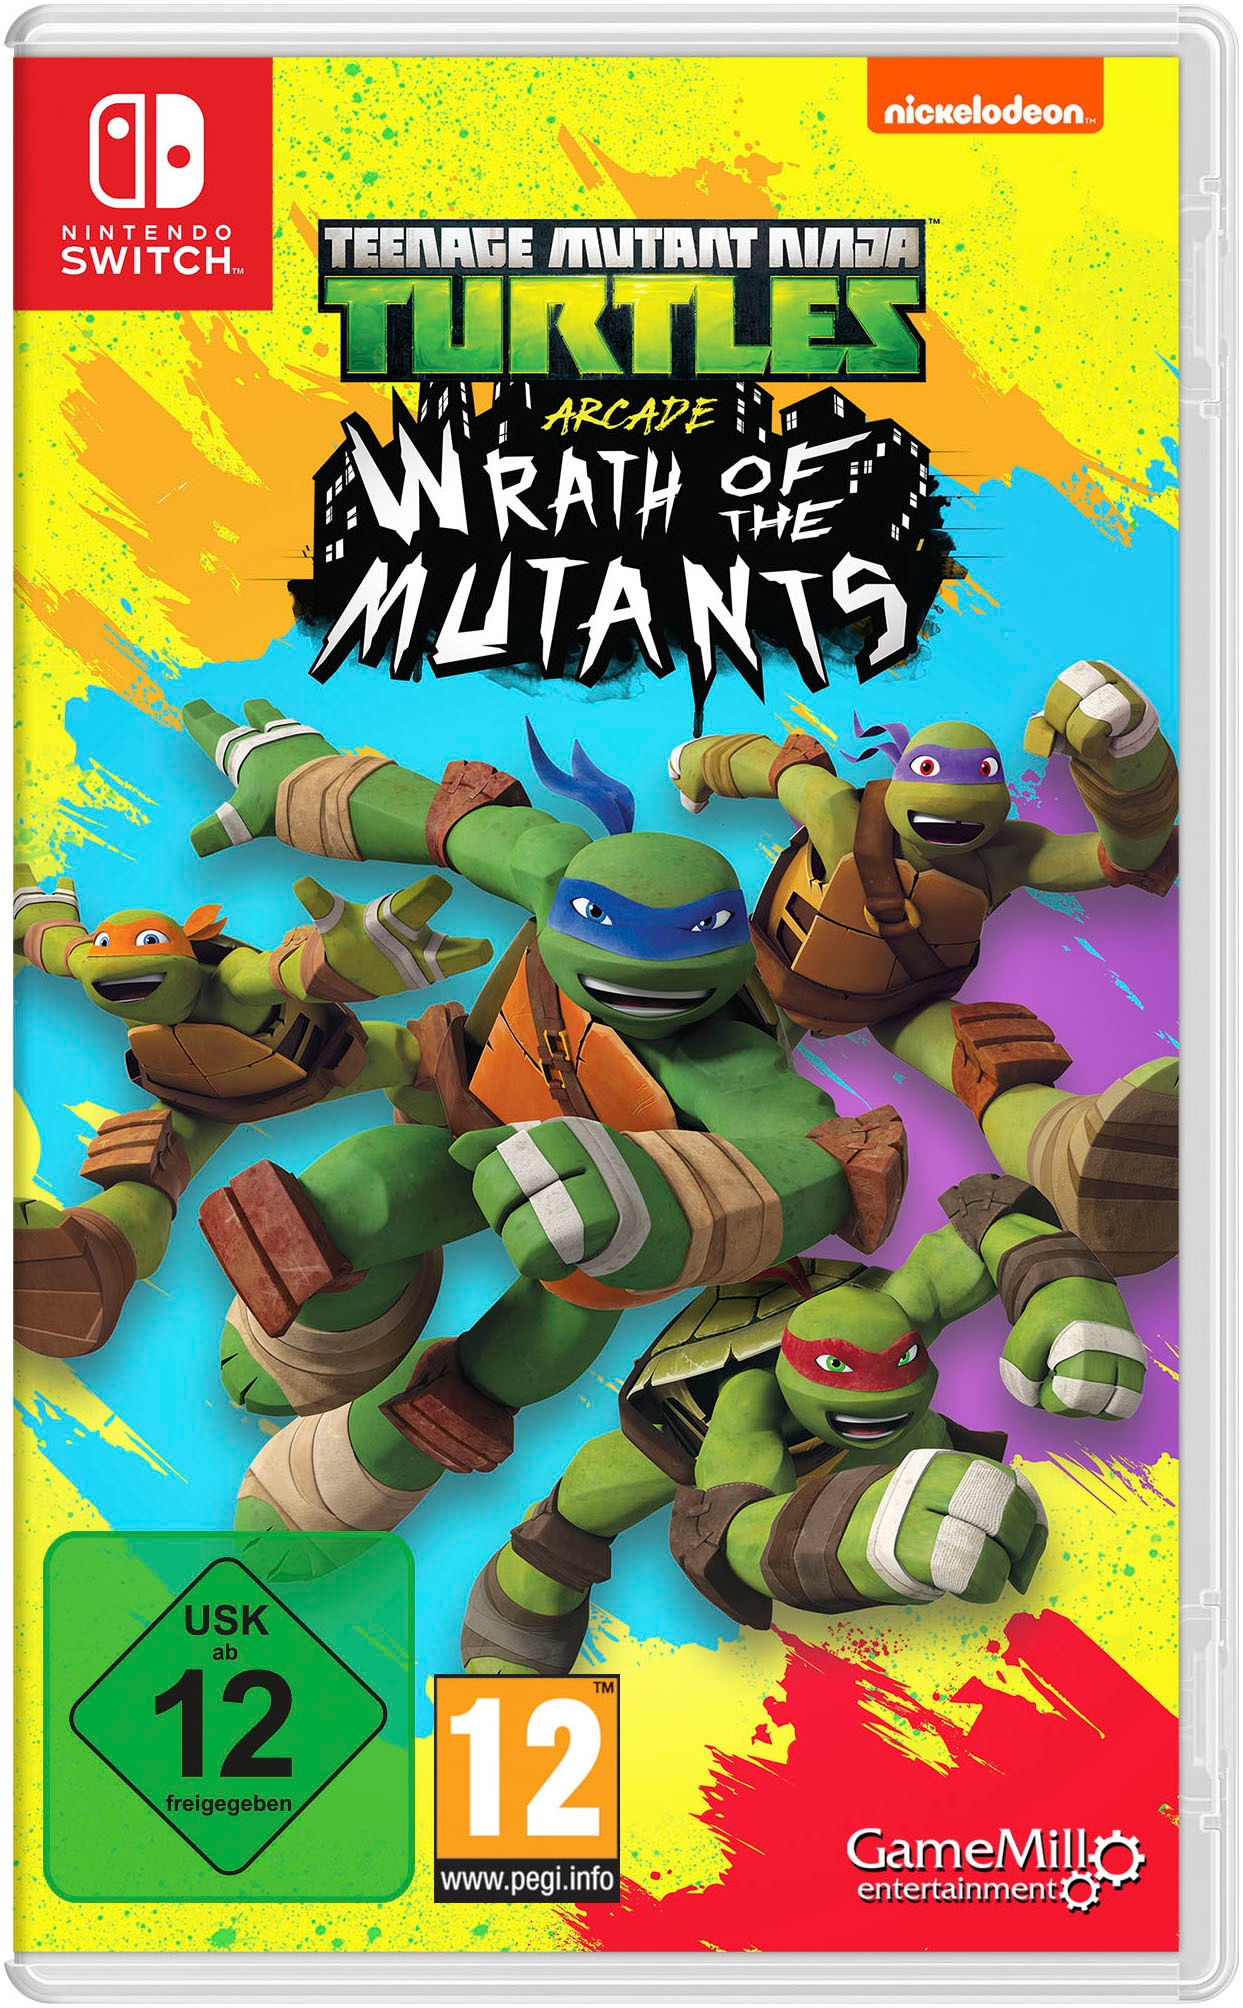 Spielesoftware »TEENAGE MUTANT NINJA TURTLES: Wrath of the Mutants«, Nintendo Switch